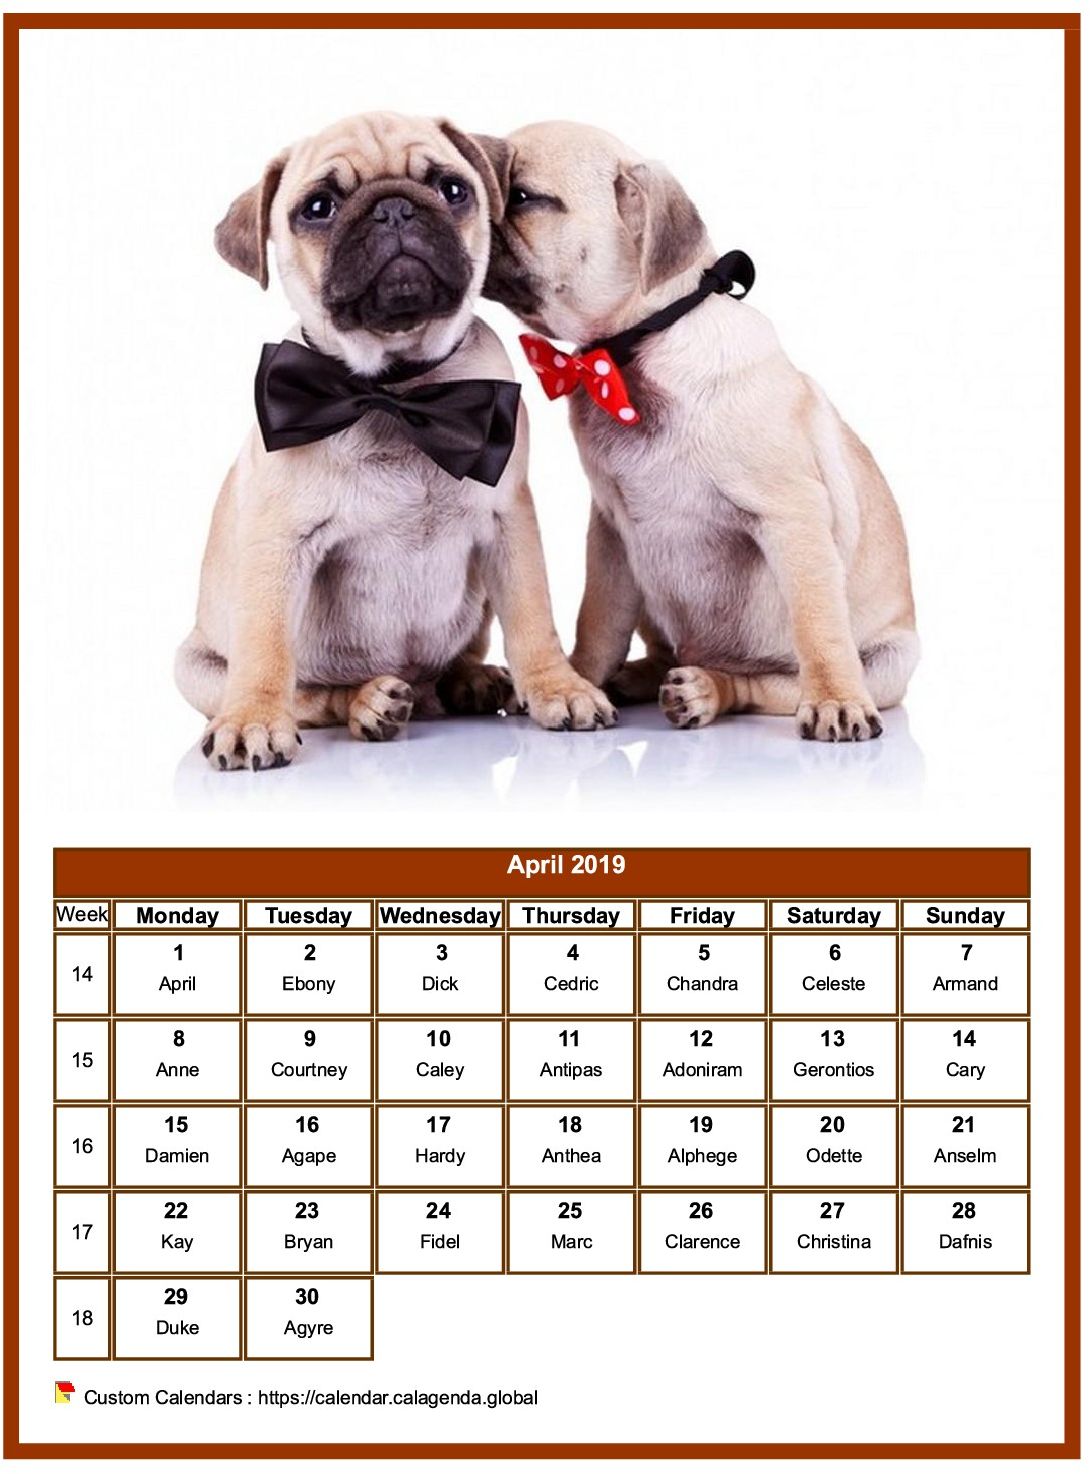 Calendar April 2019 dogs